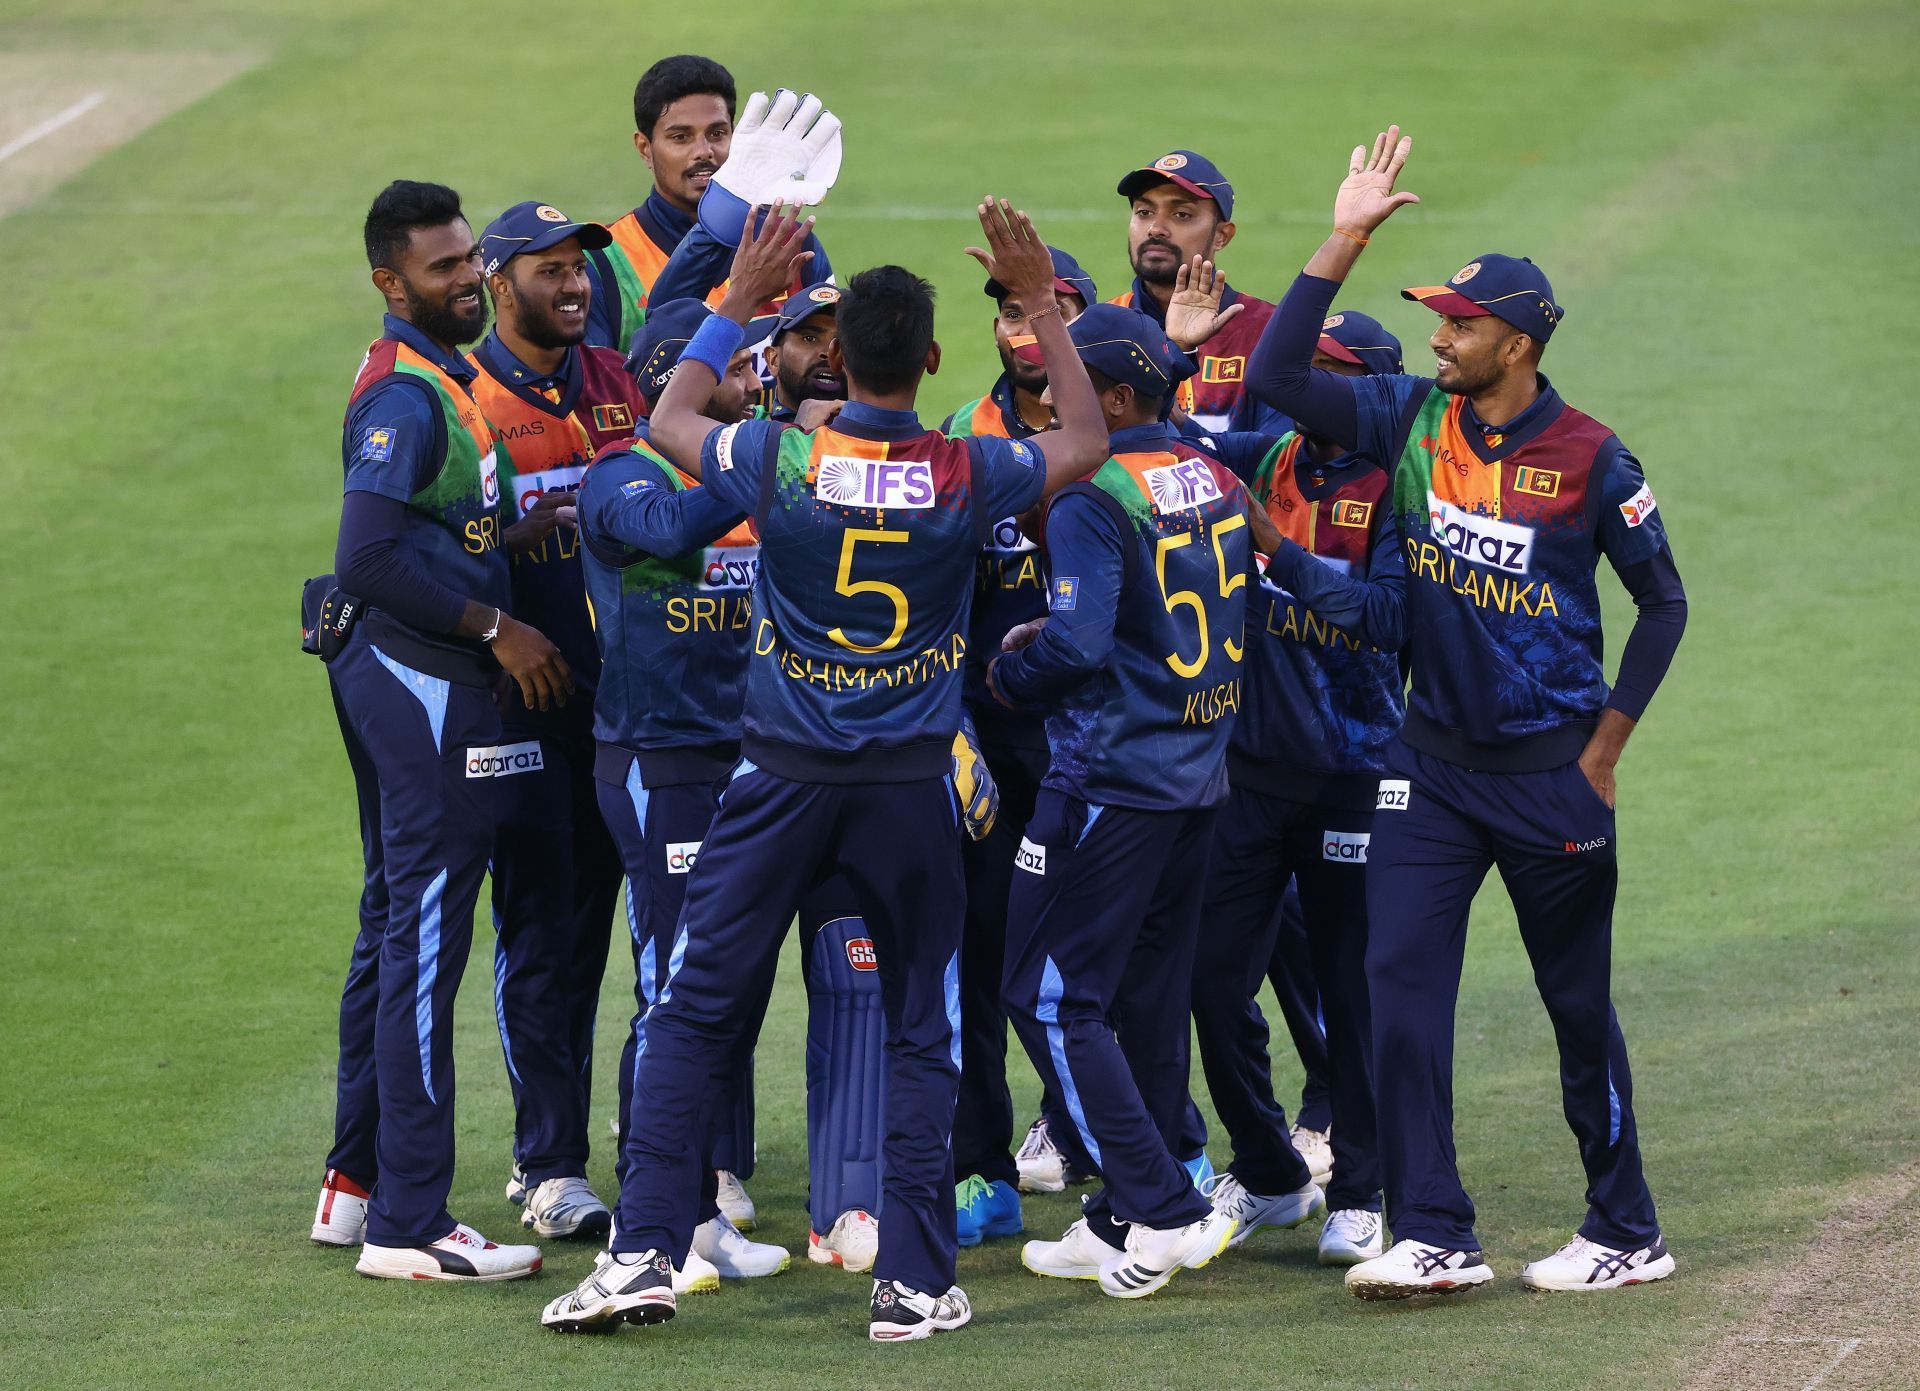 England vs Sri Lanka - T20 International Series Second T20I